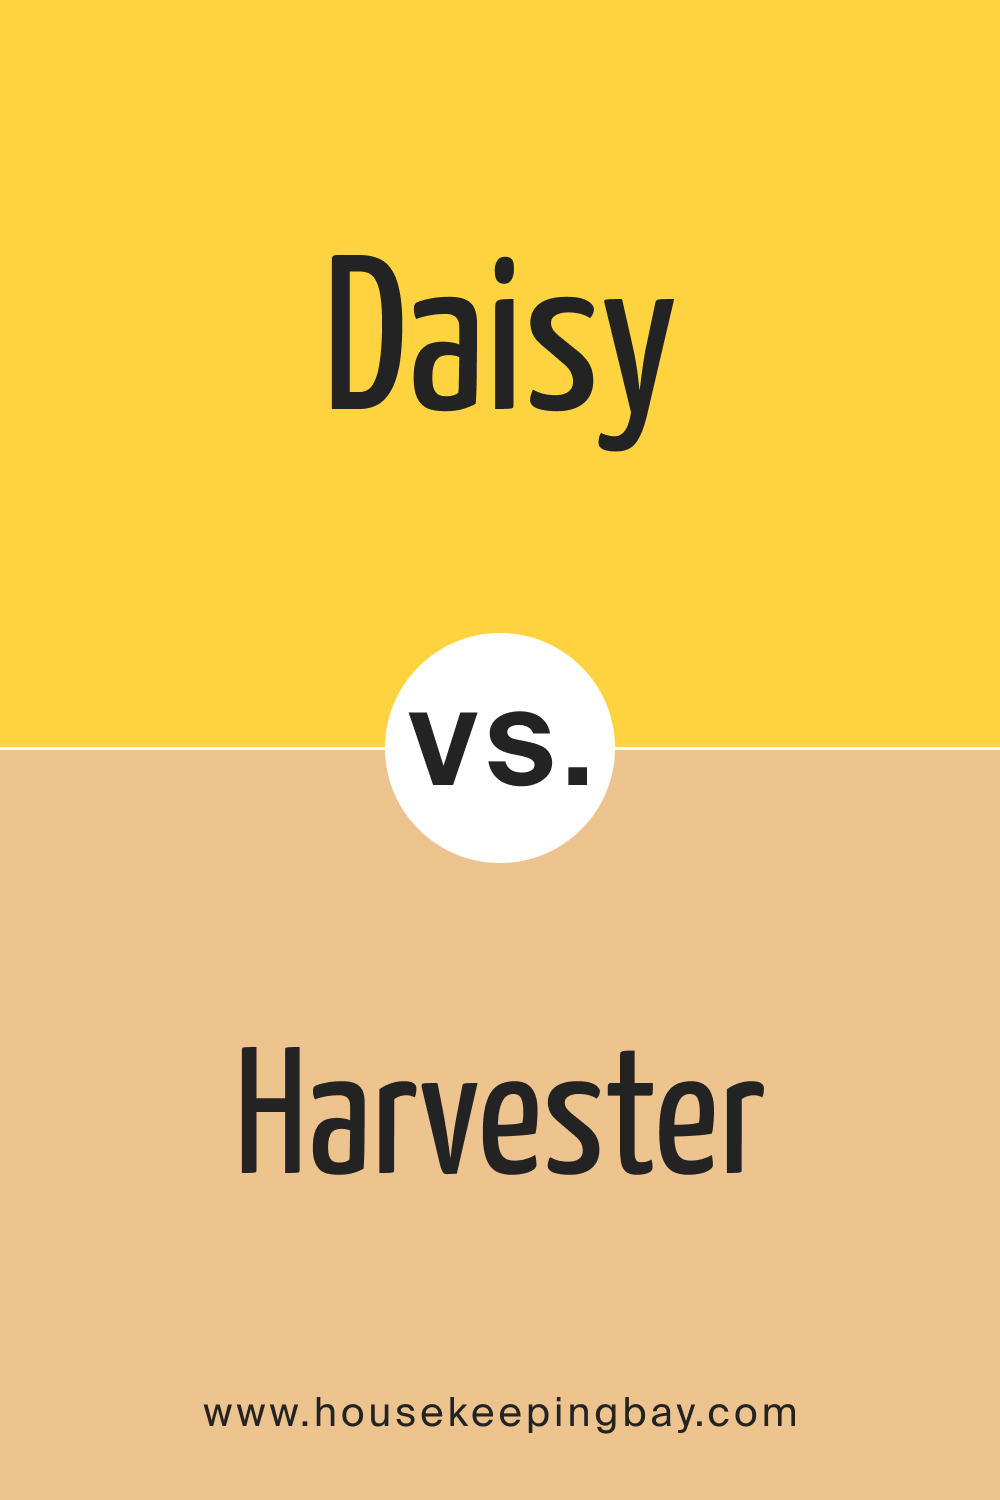 Daisy SW 6910 vs SW 6373 Harvester